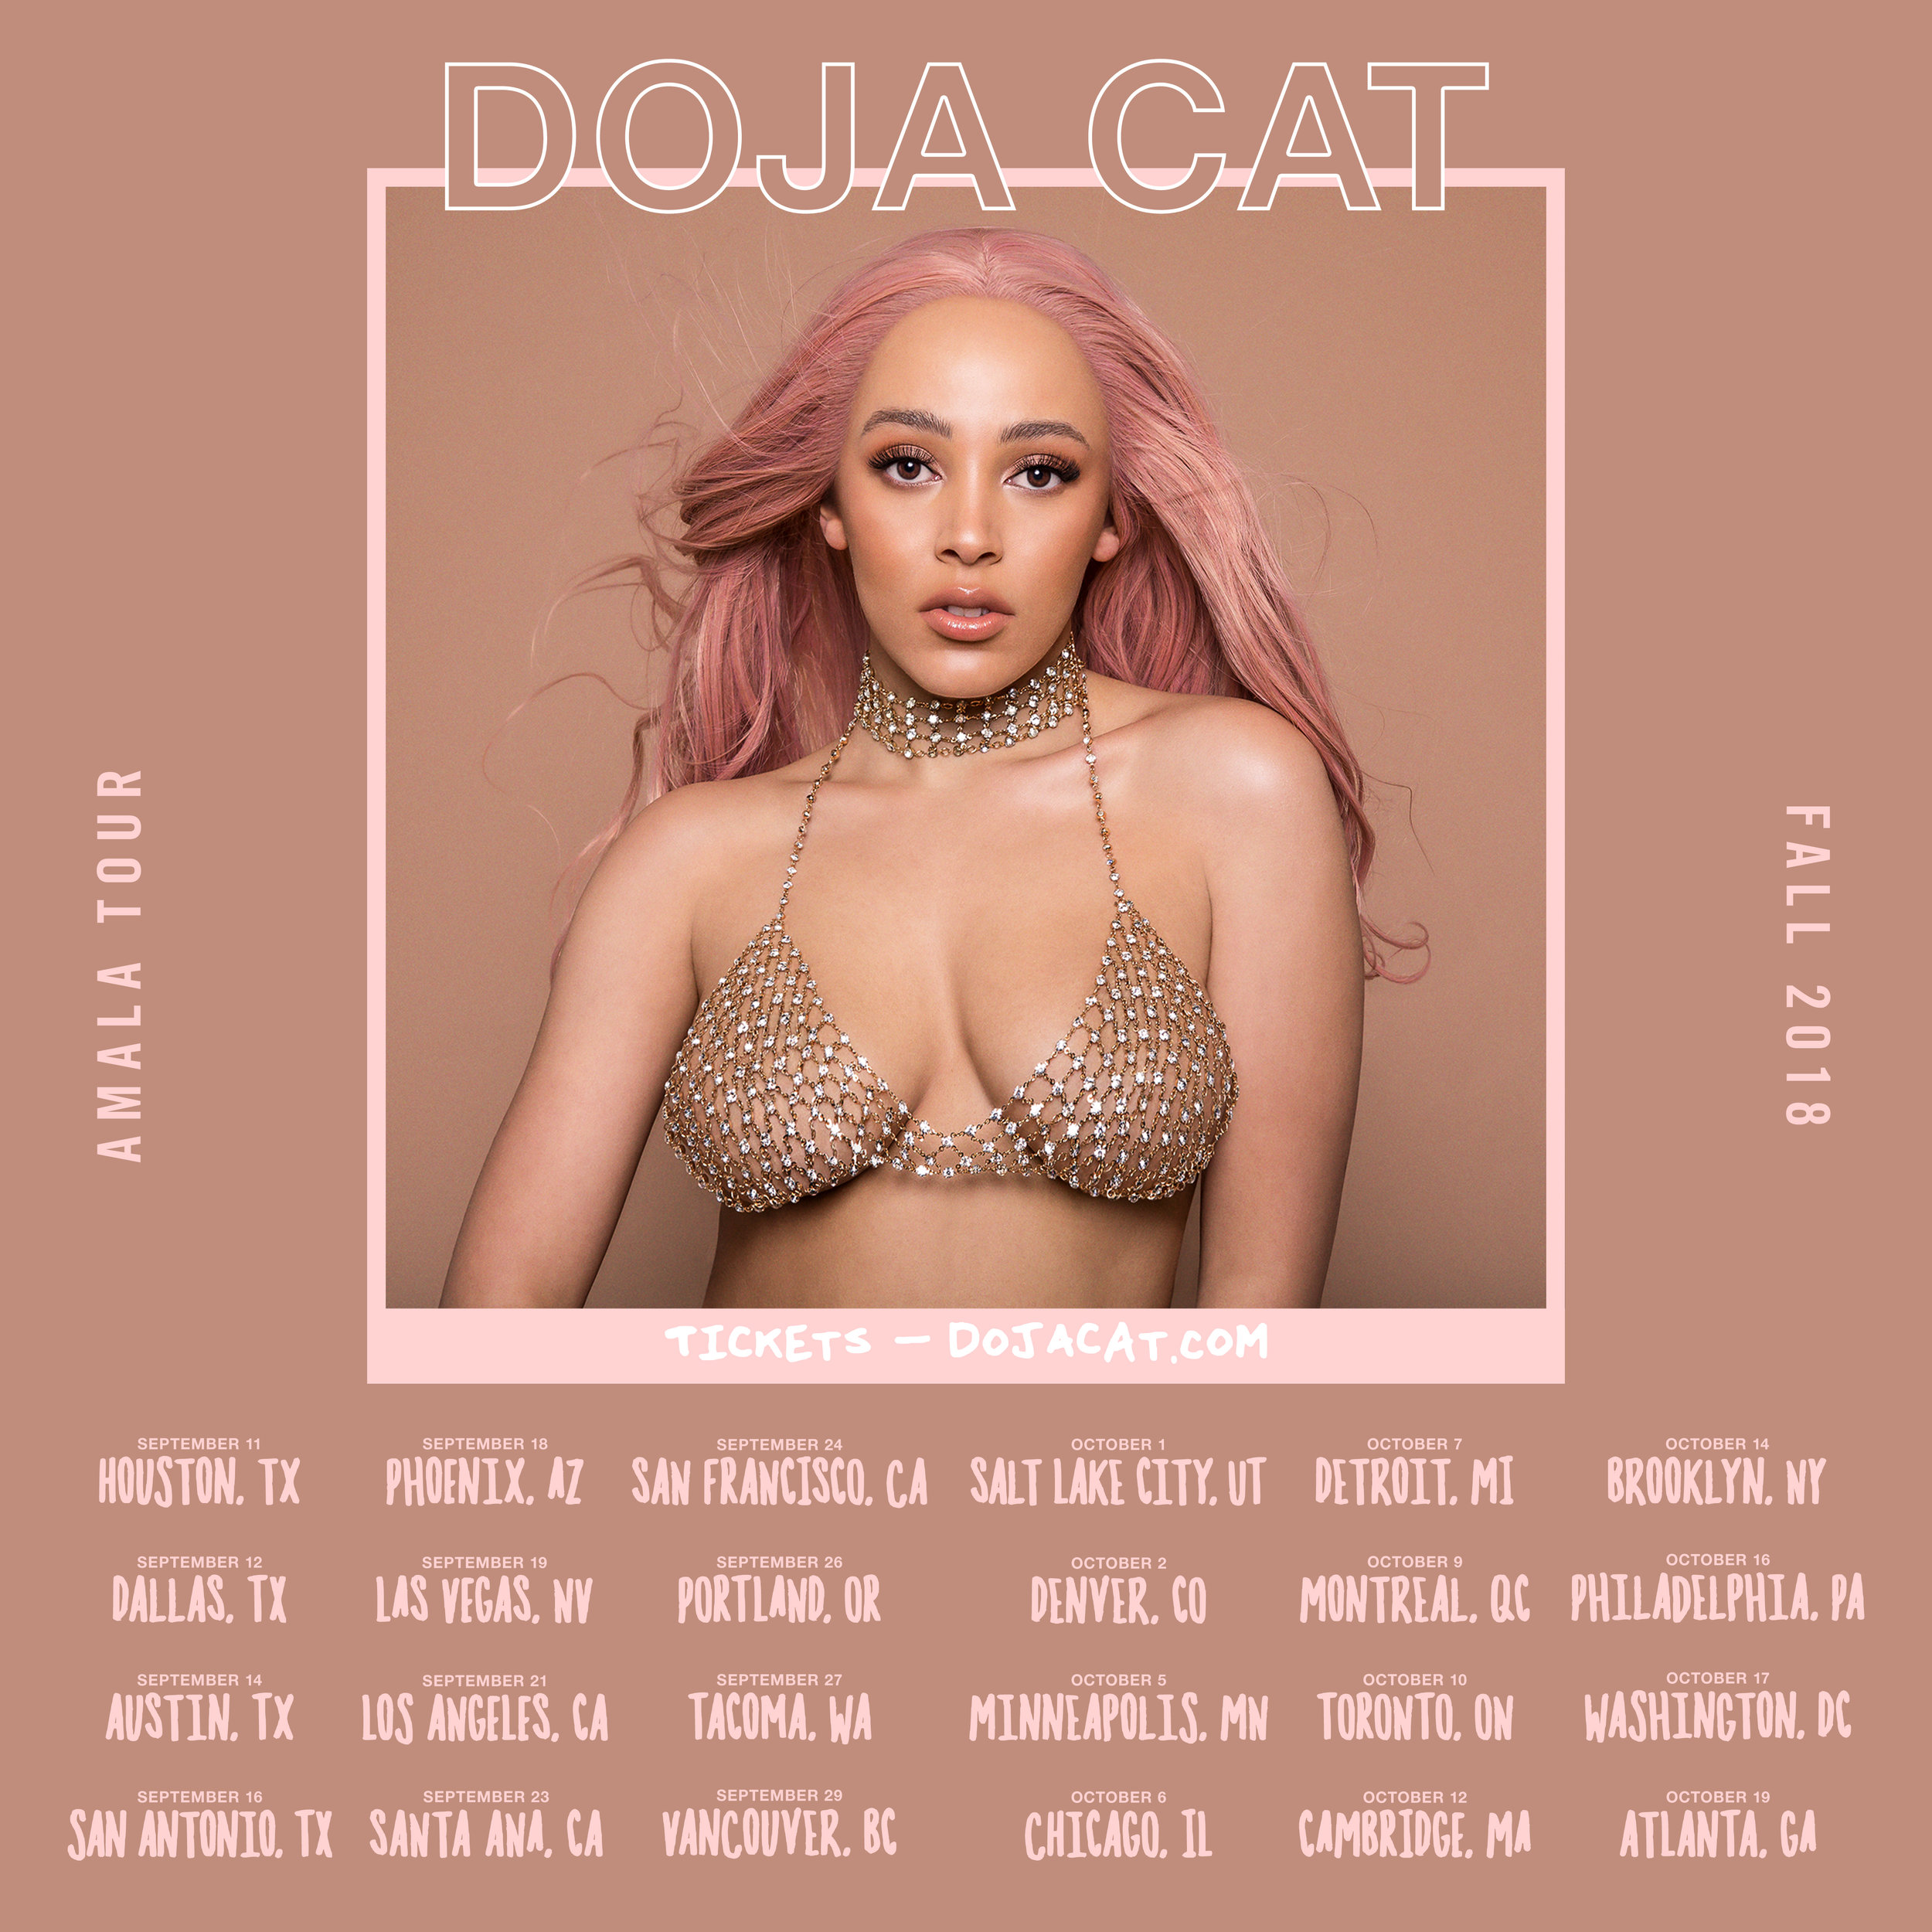   DOJA CAT (FALL TOUR 2018)   Created an original font to be used for the tour dates.  —  Design:  John Liwag  